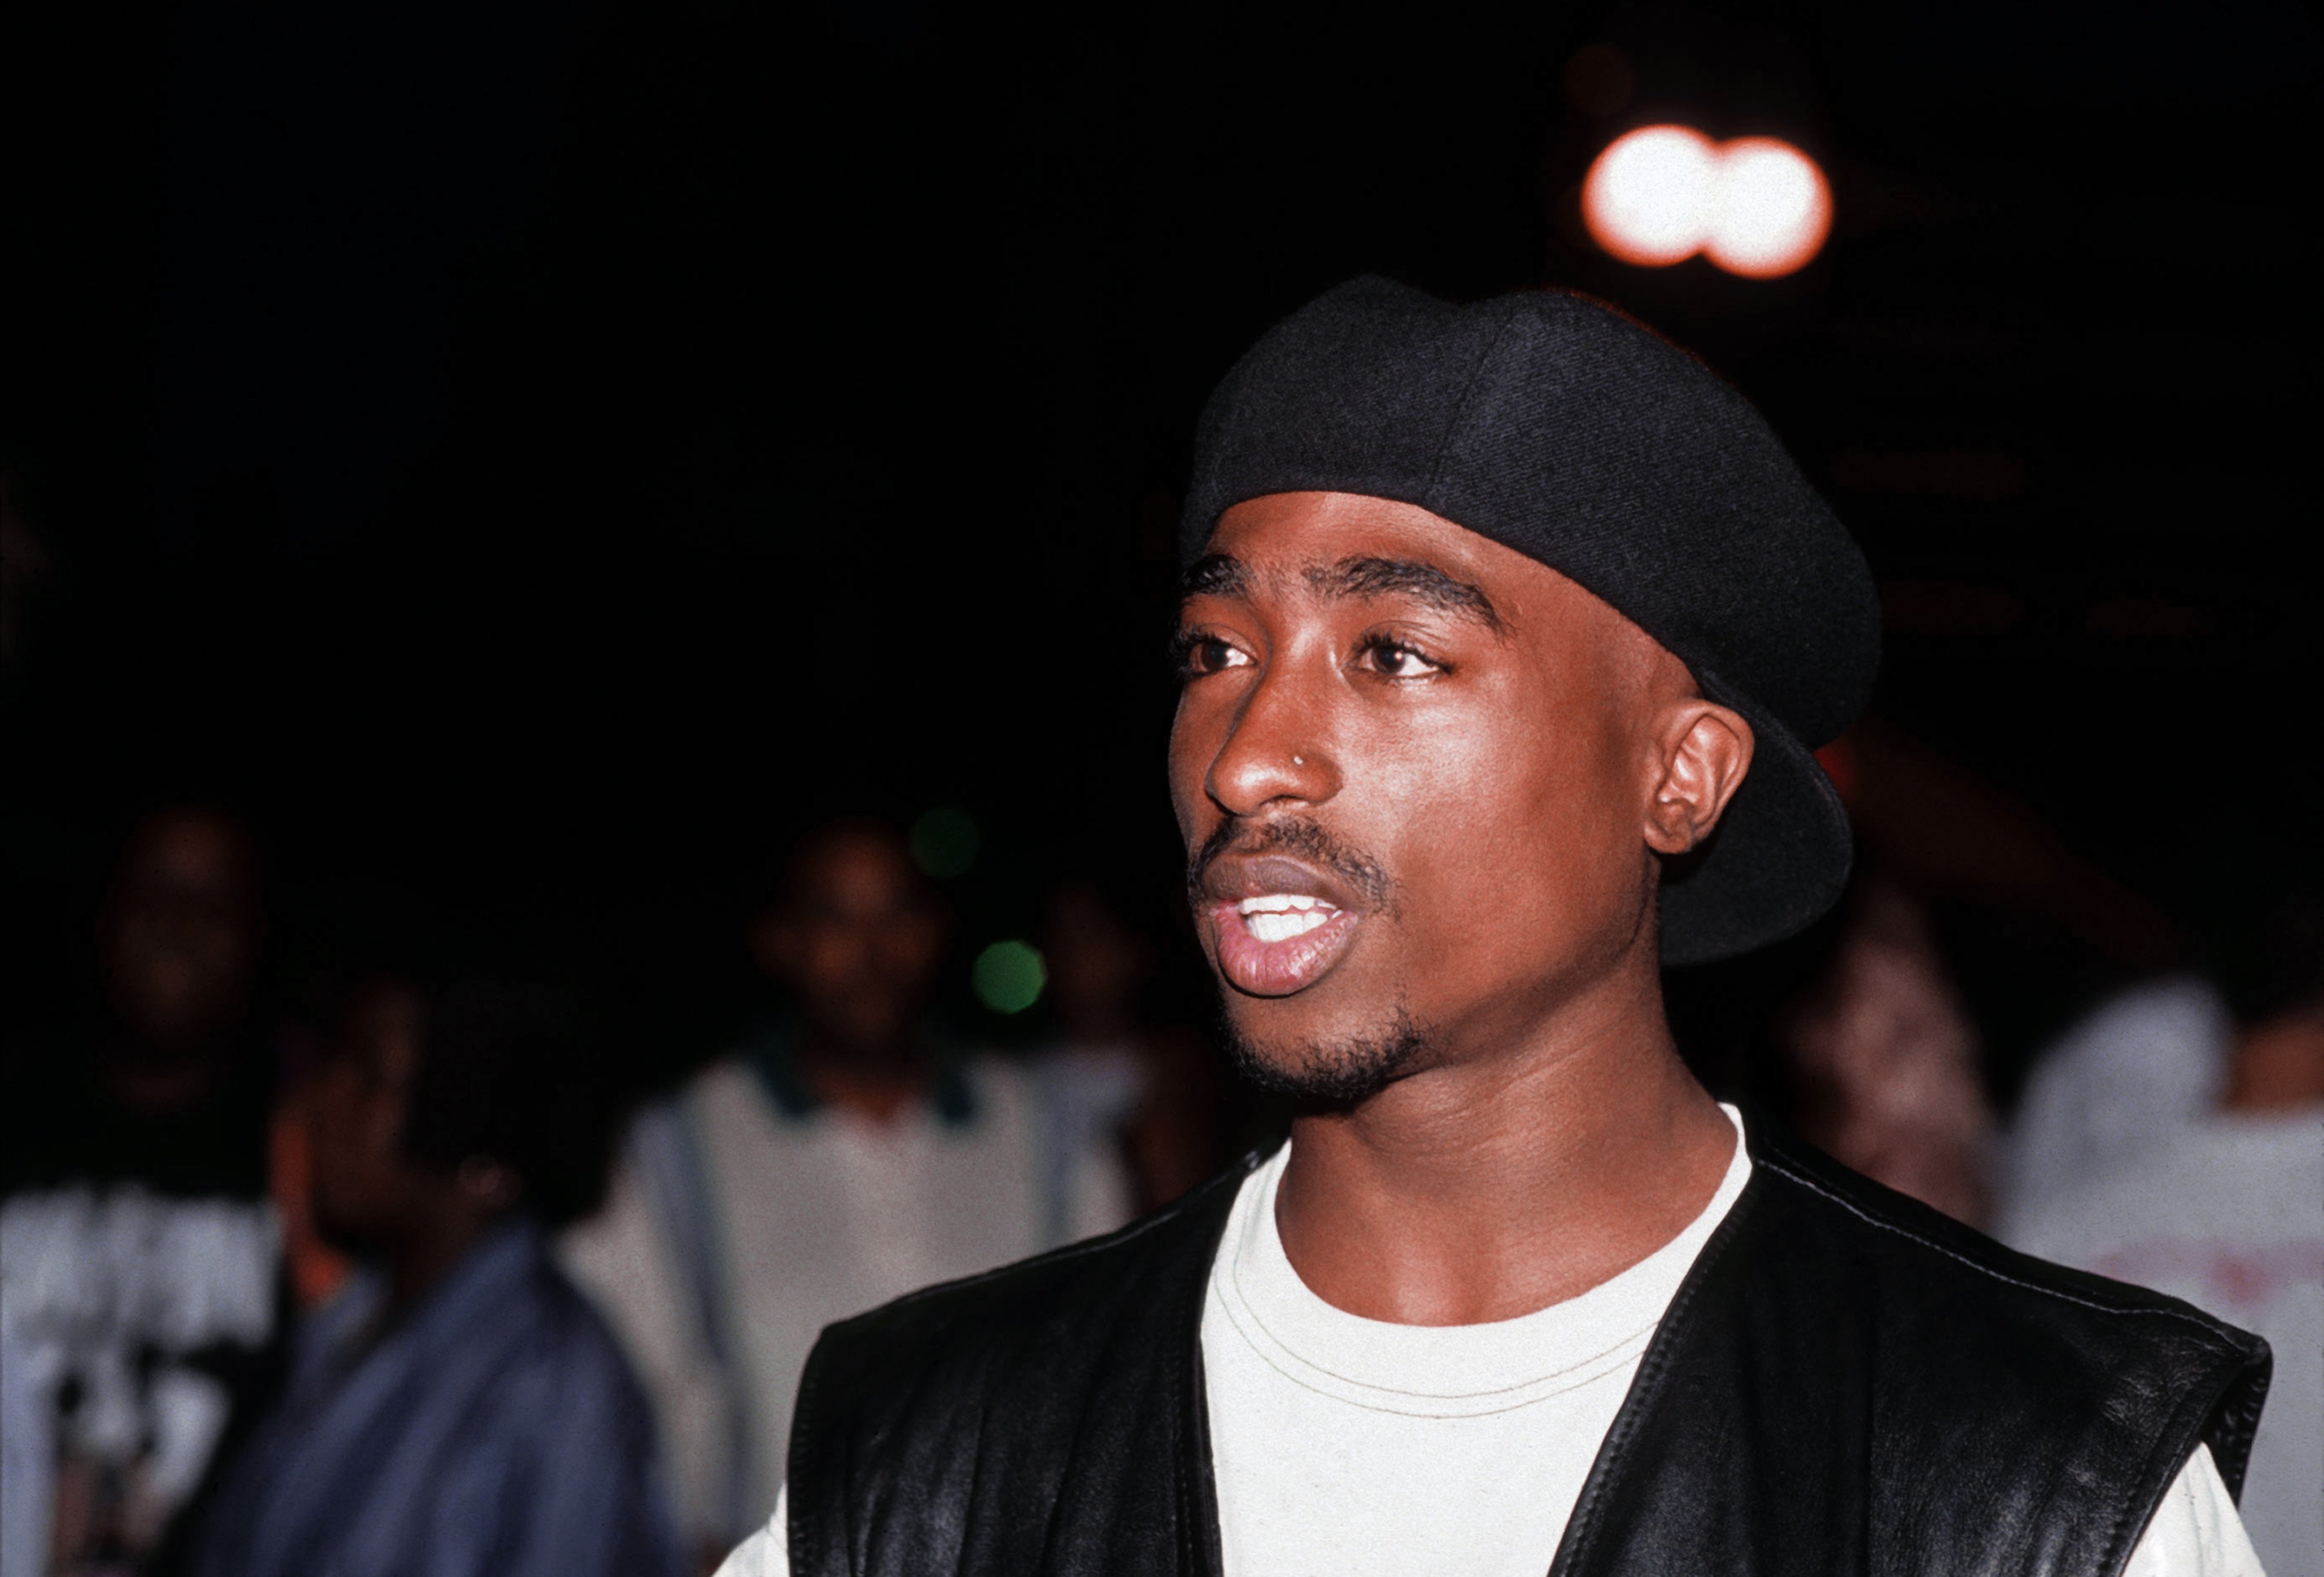 Oakland Names June 16th “Tupac Shakur Day”